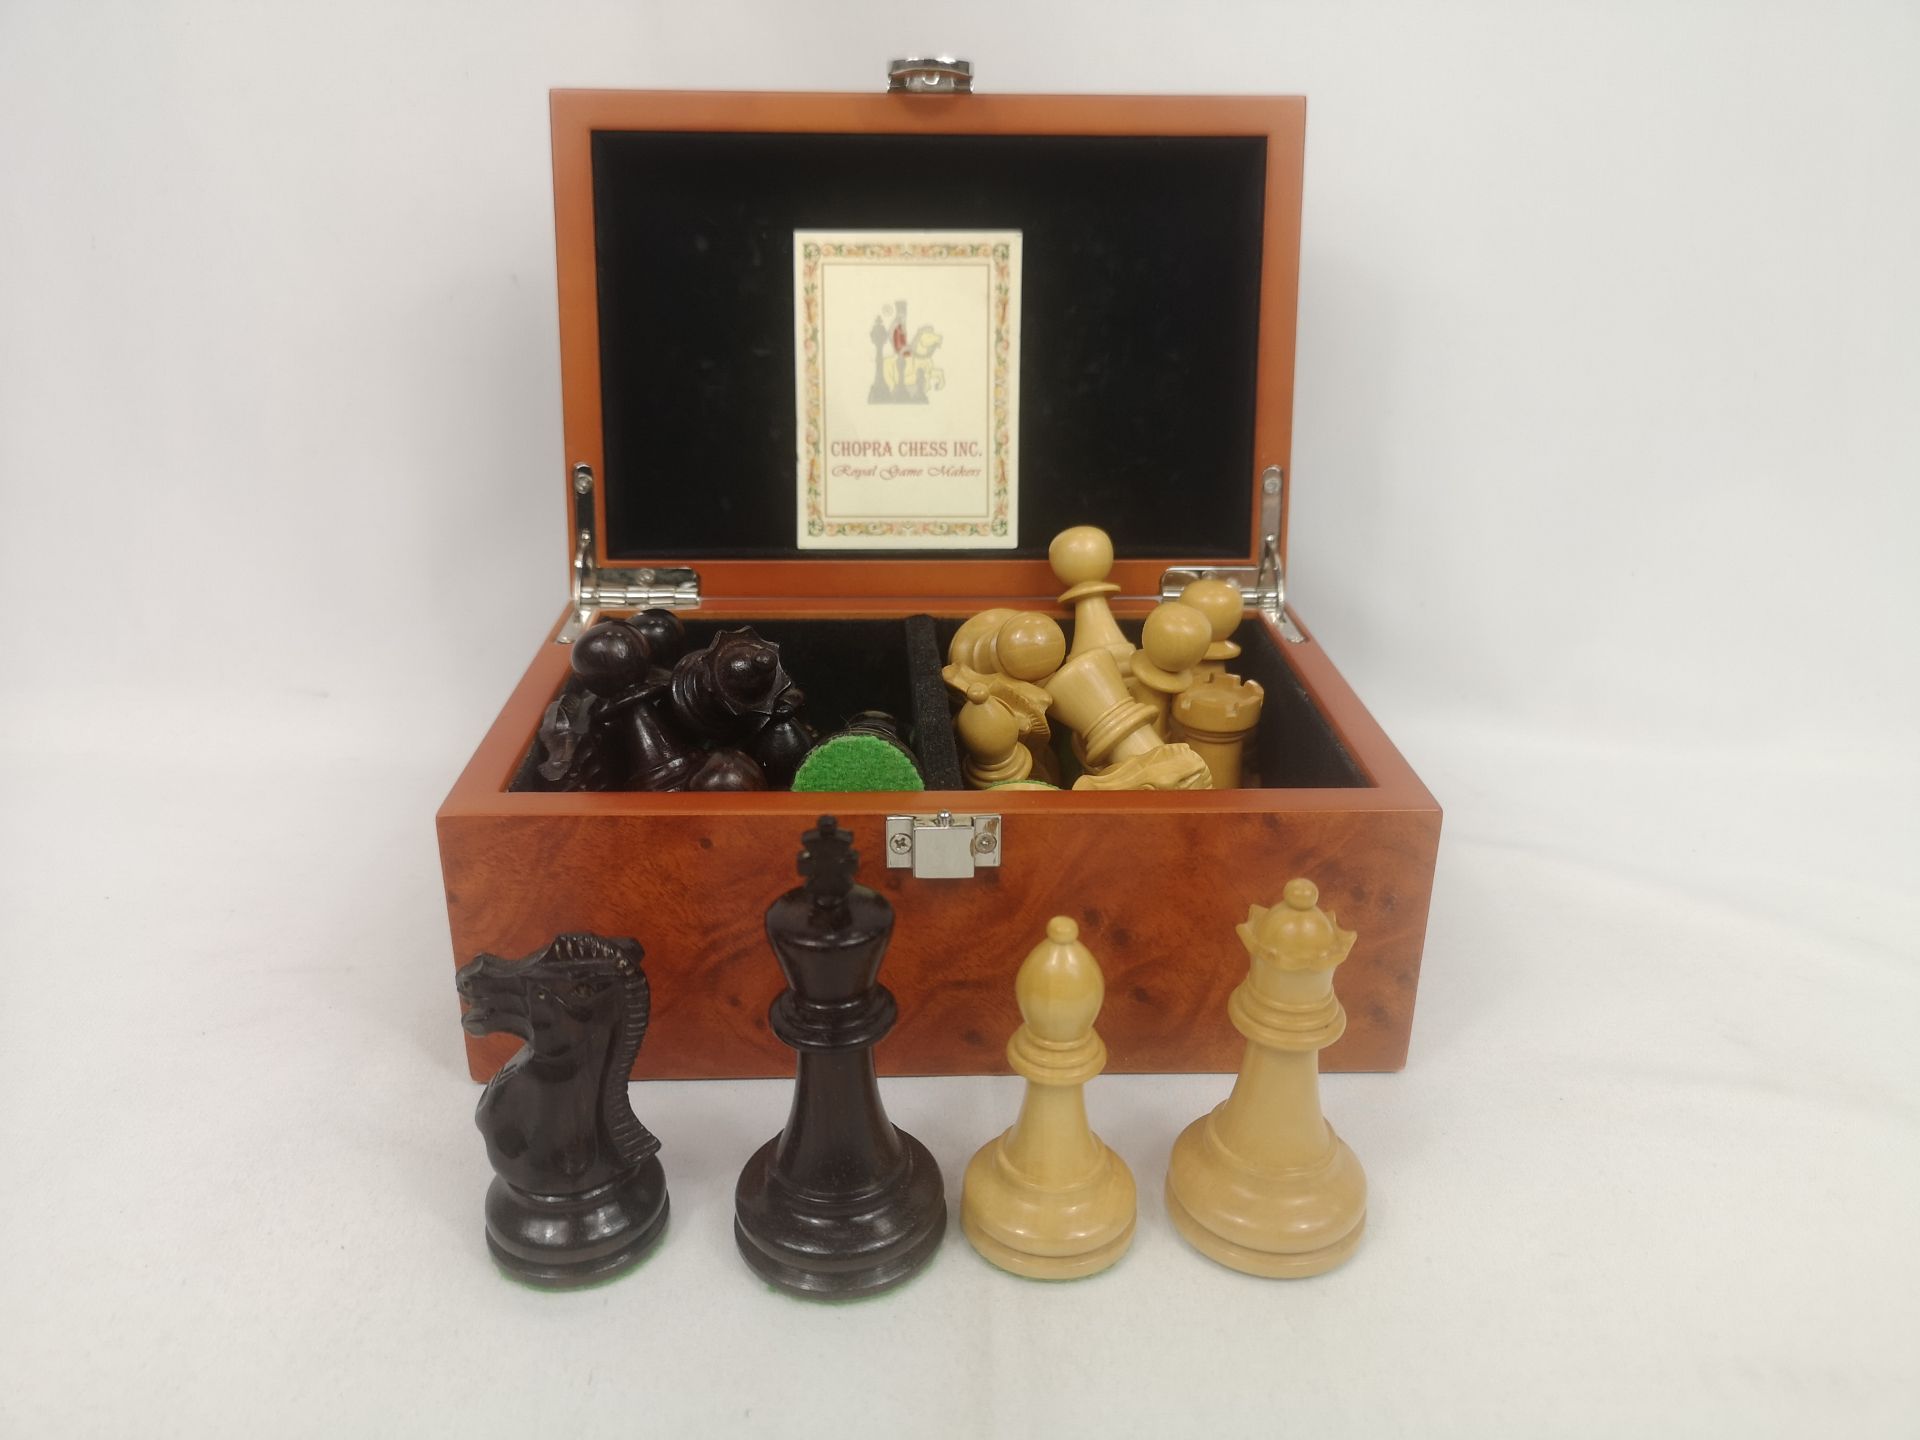 Chopra chess set in box - Image 2 of 4